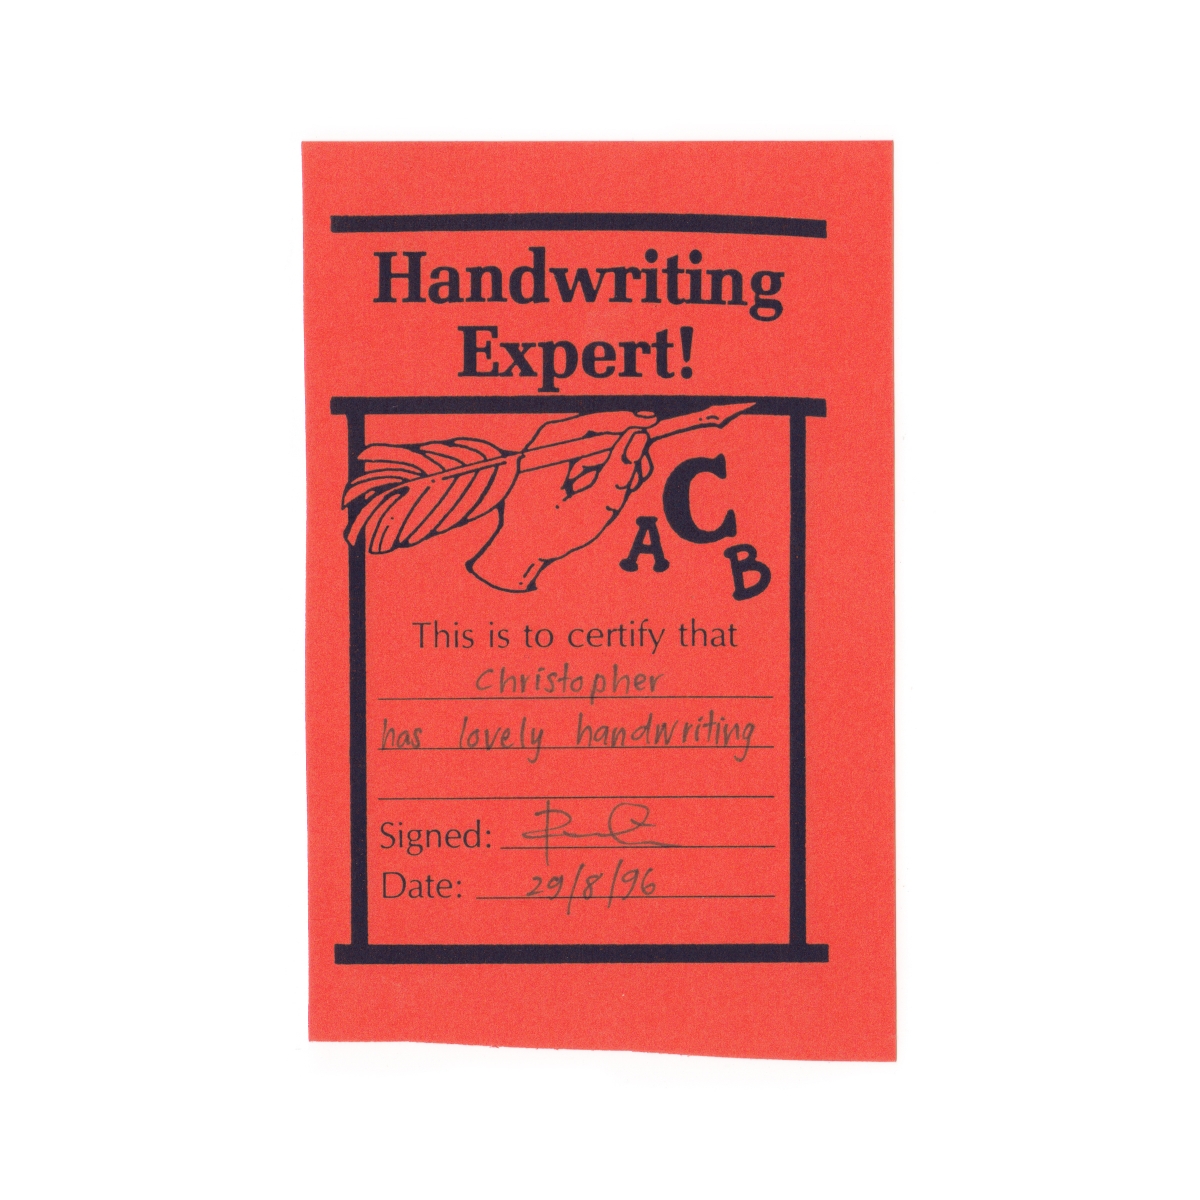 Handwriting expert certificate.